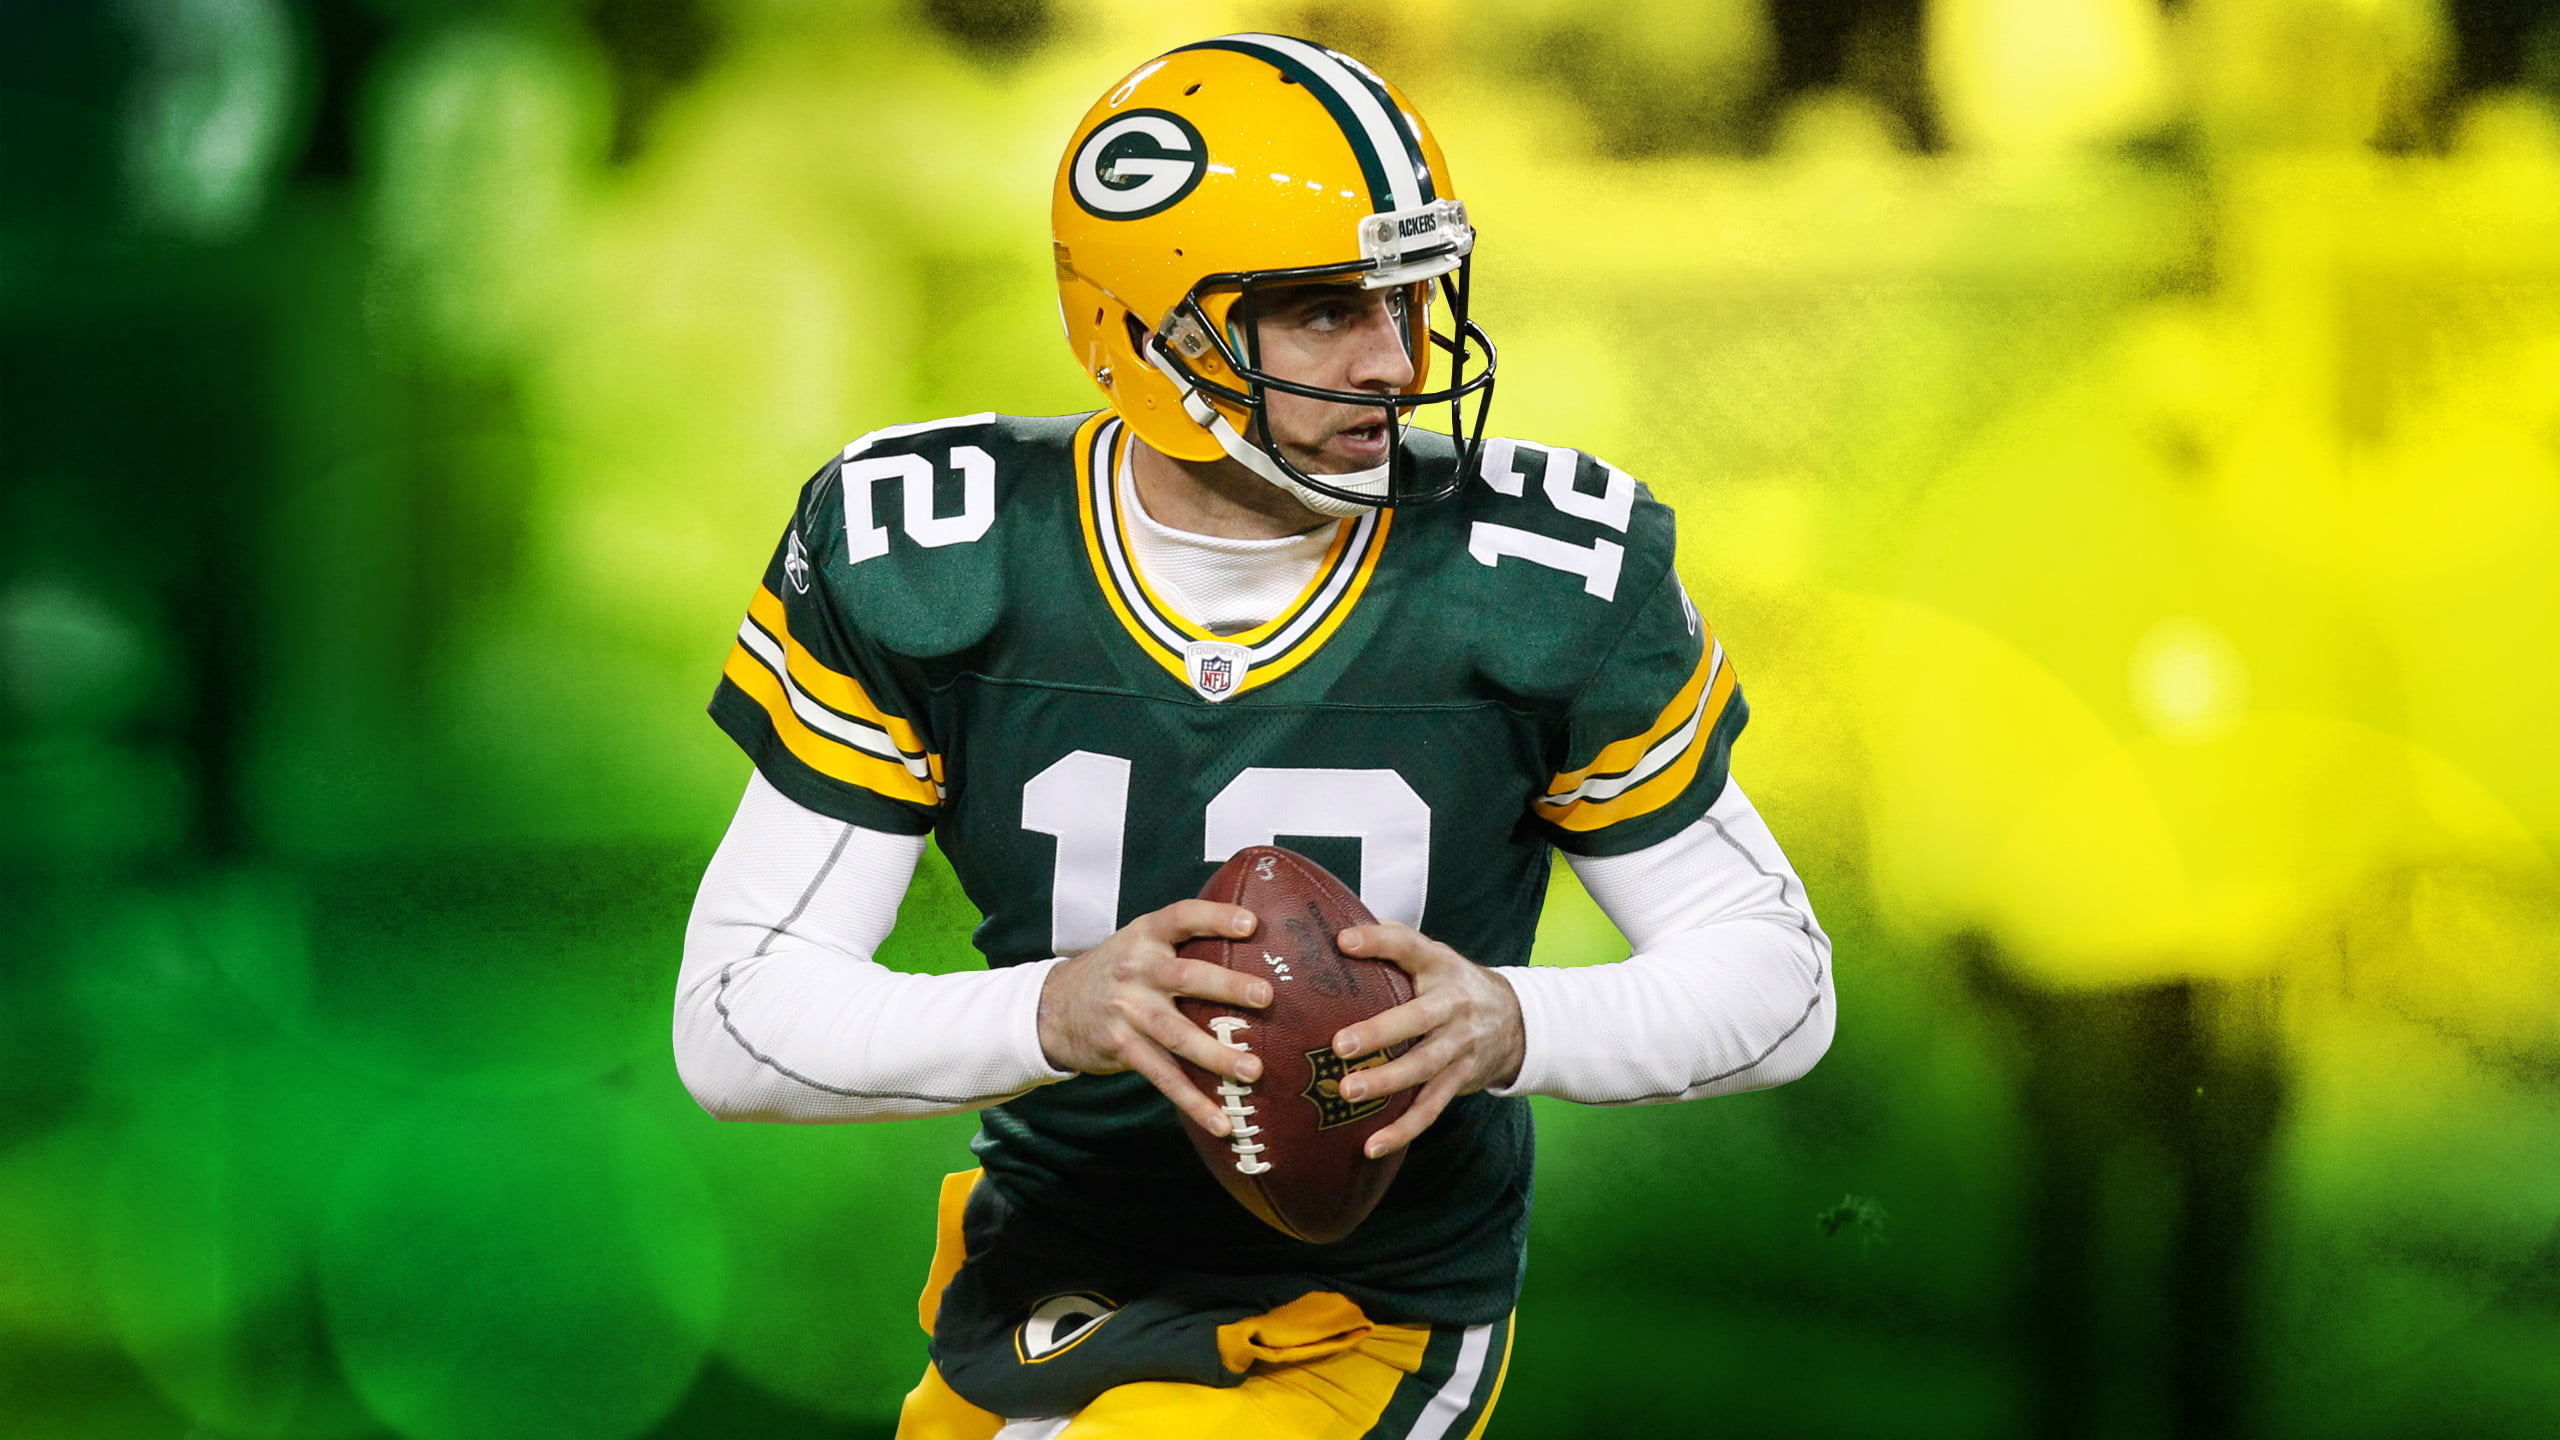 Green Bay Packers, Number 12 player wallpaper, Football team, Packers pride, 2560x1440 HD Desktop